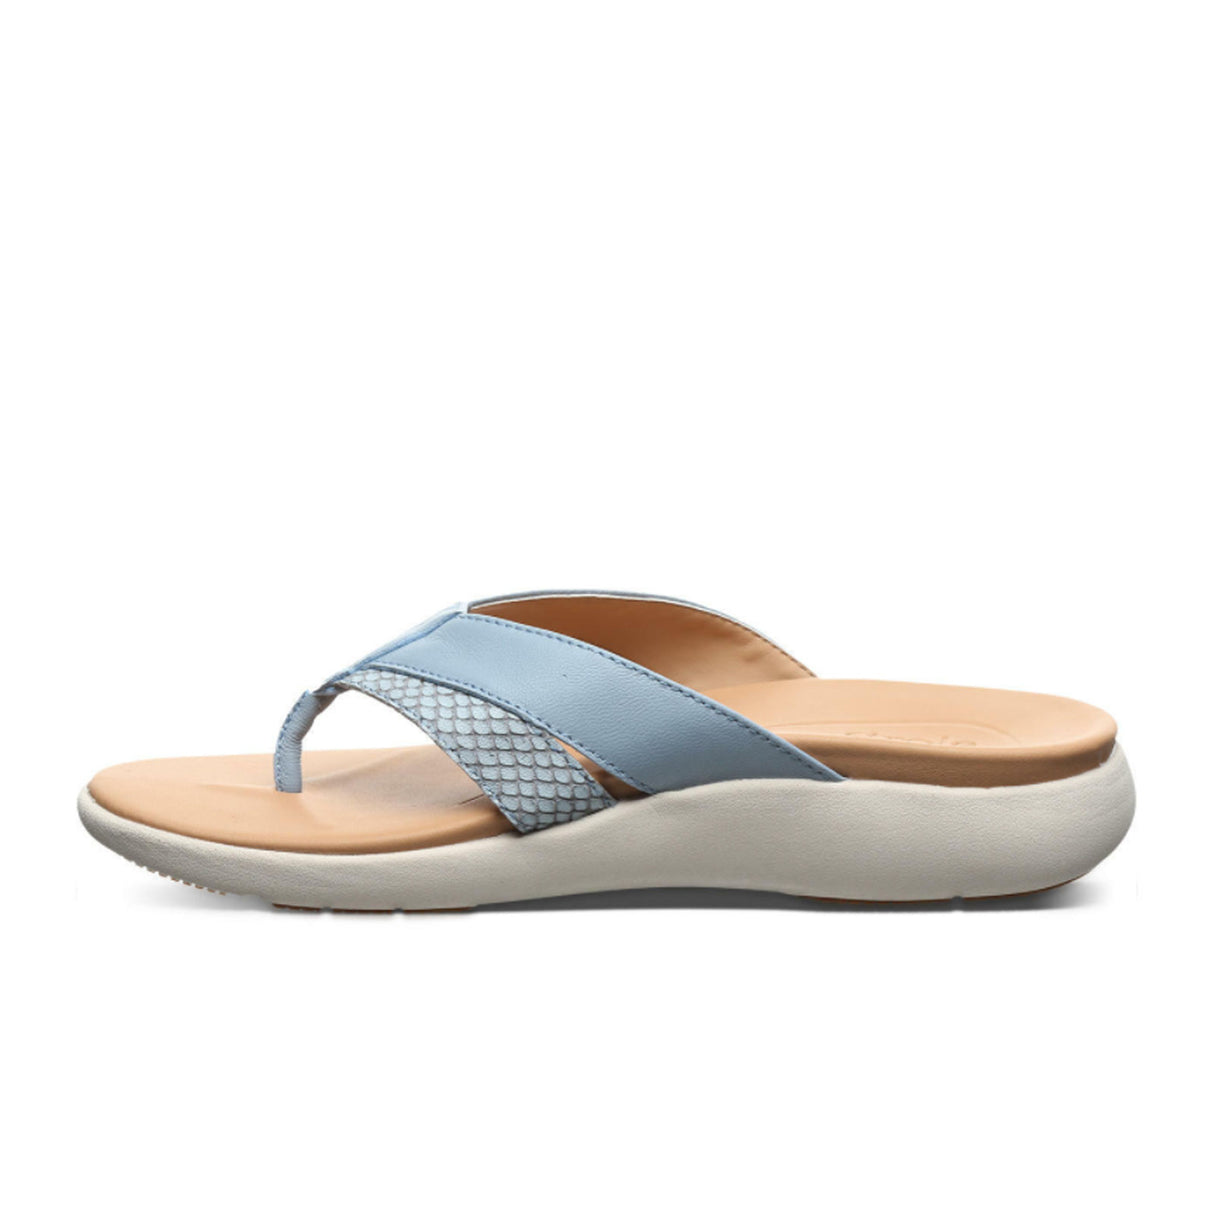 Strole Bliss Thong Sandal (Women) - Light Blue Sandals - Thong - The Heel Shoe Fitters